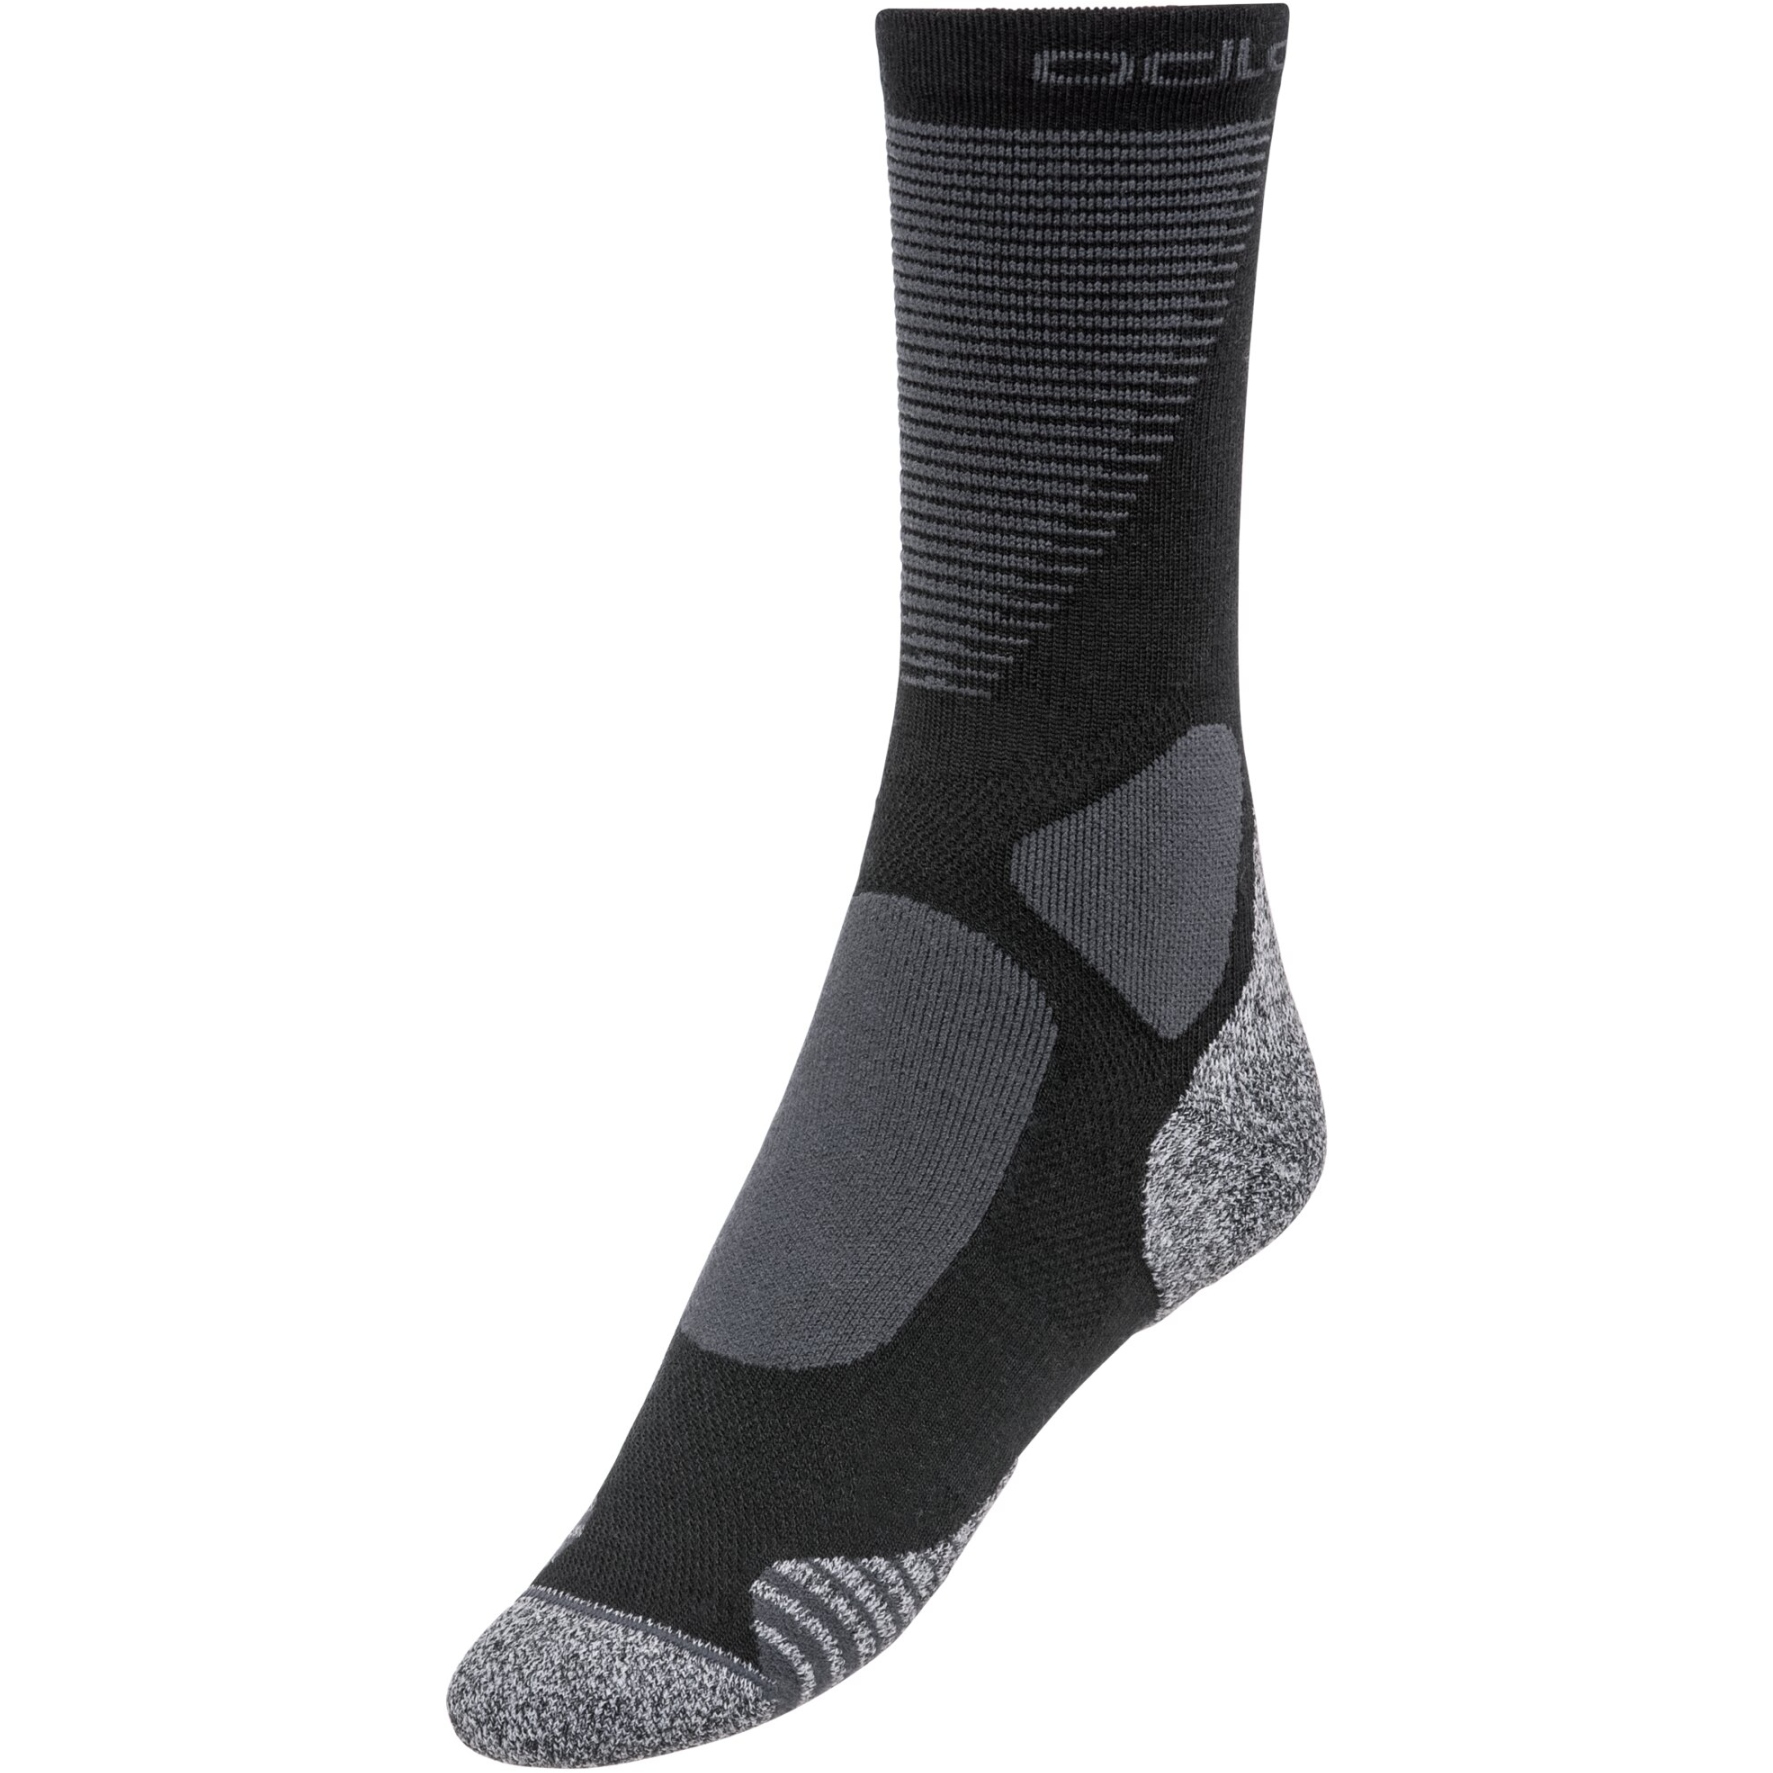 Picture of Odlo Active Warm Cross-Country Crew Socks - black - odlo graphite grey